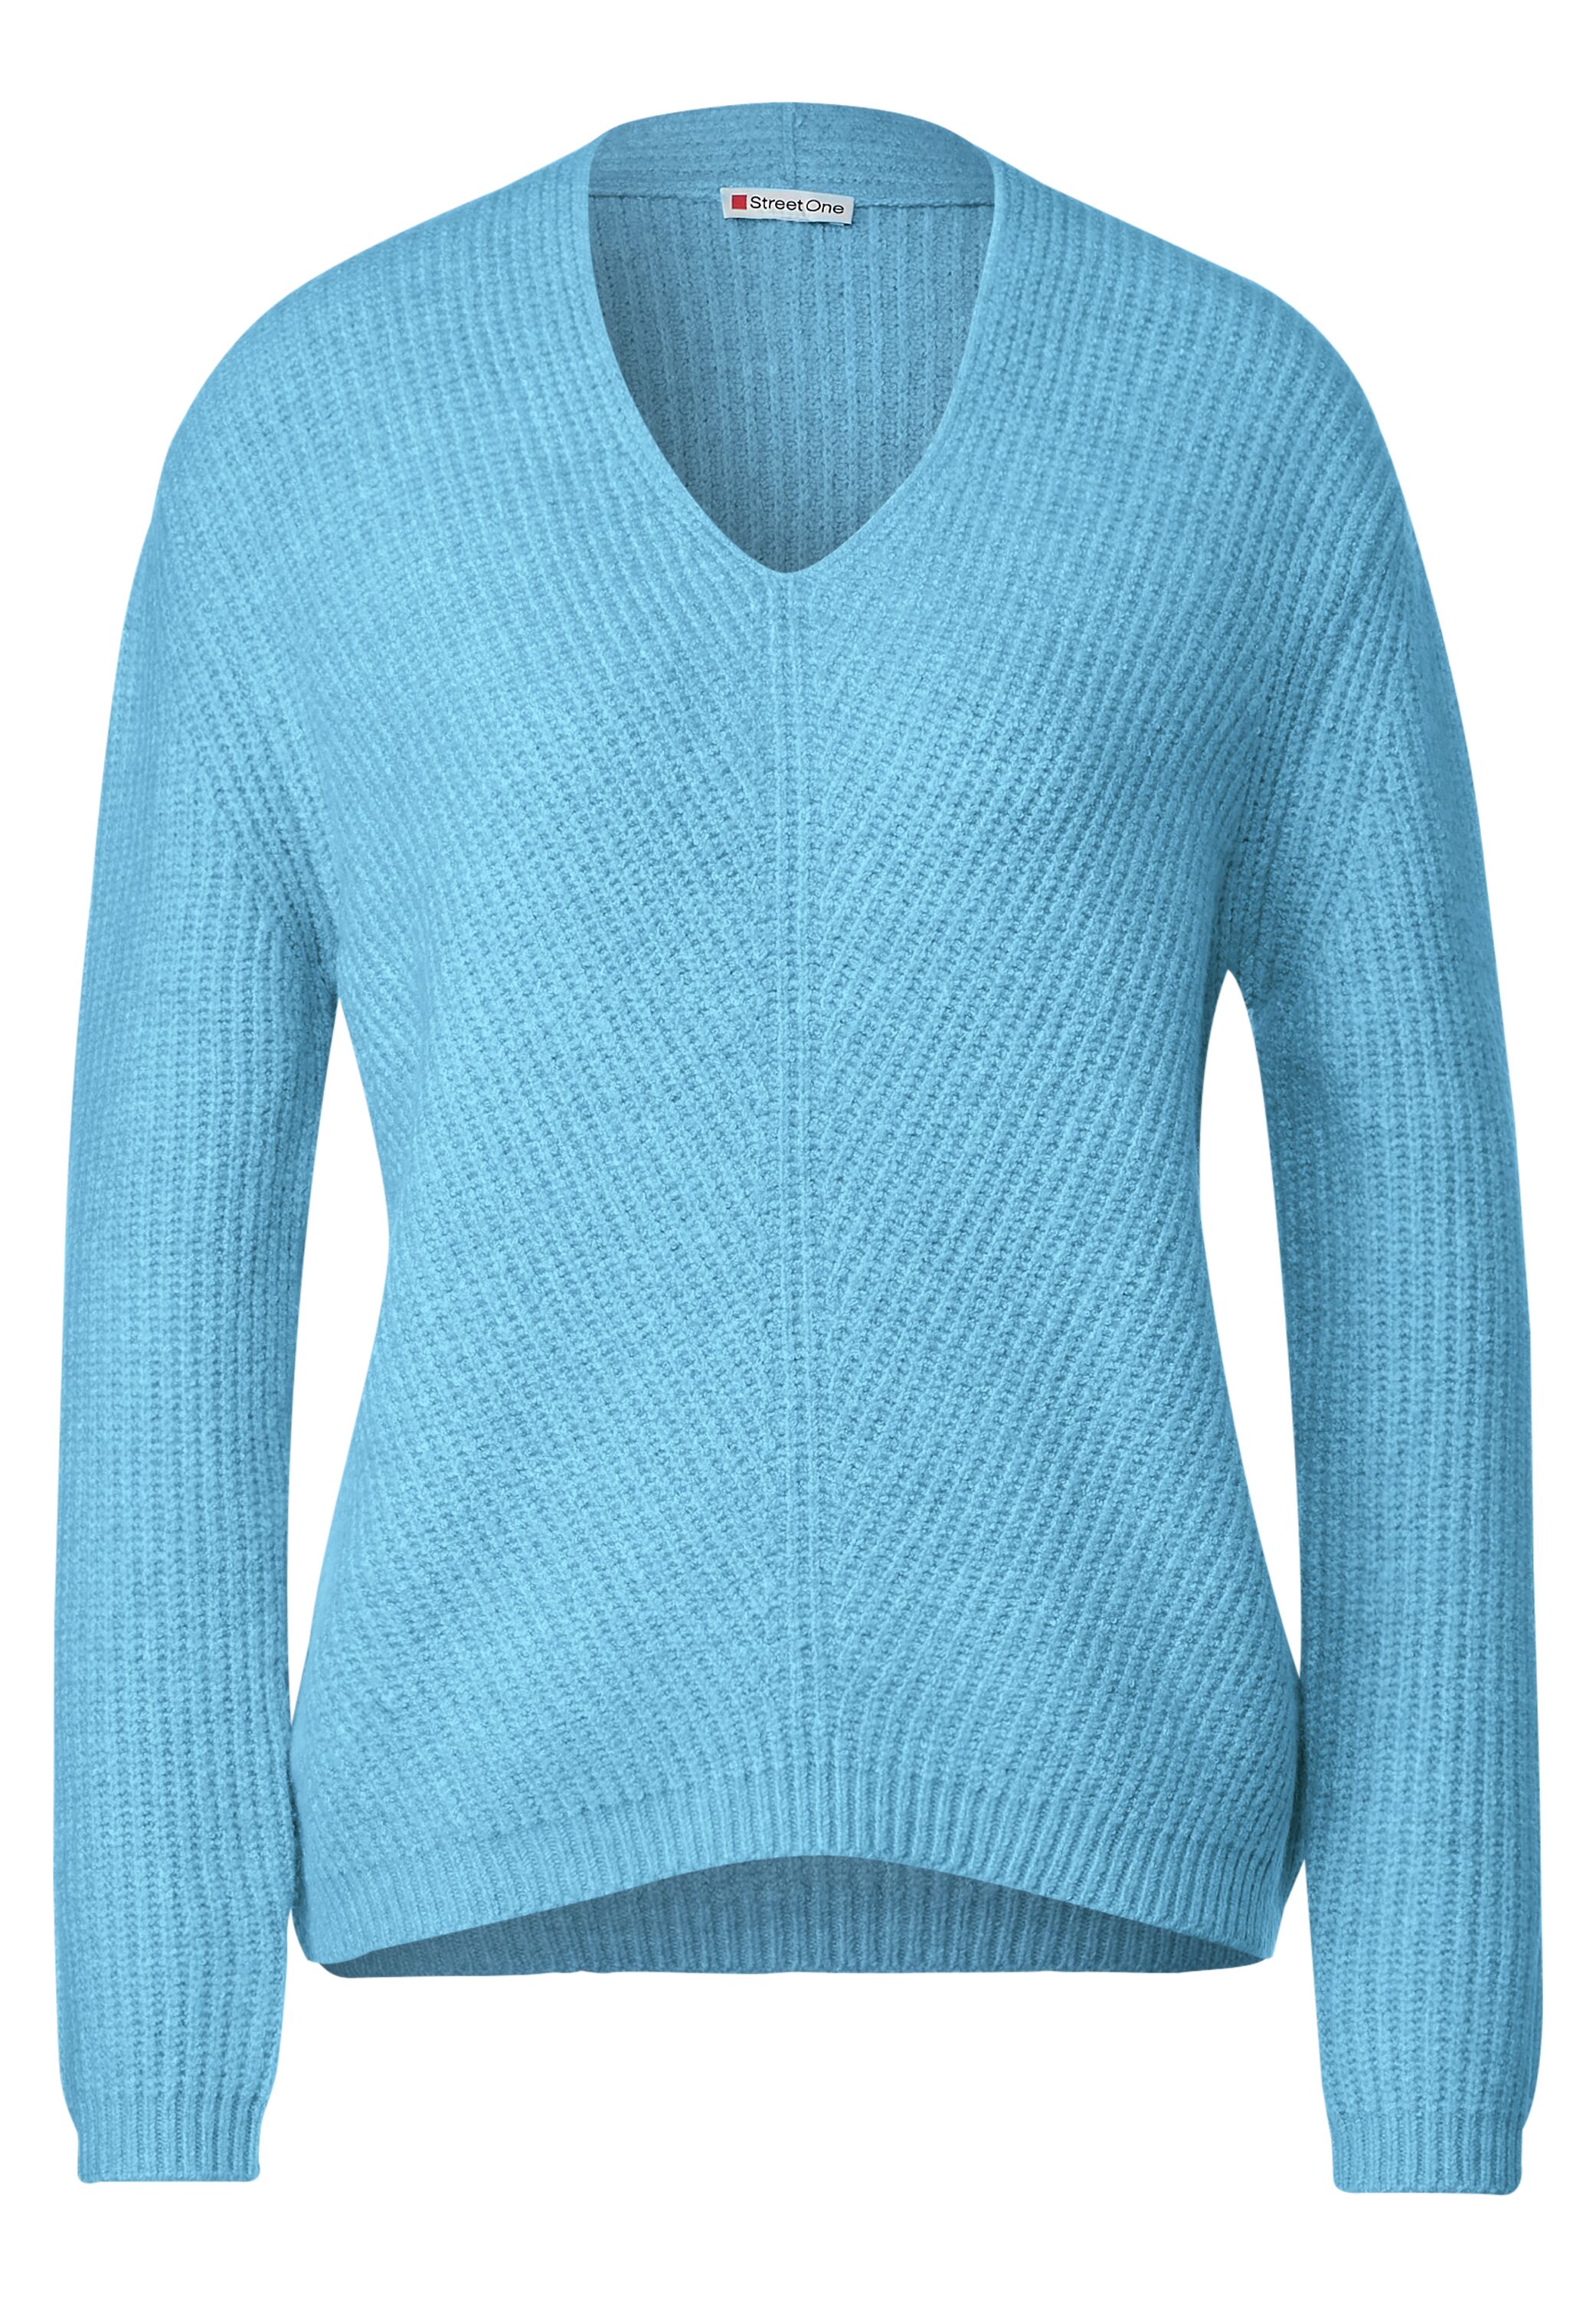 Street One V-Ausschnitt Pullover in Light Aquamarine Blue im SALE reduziert  A302538-15374 - CONCEPT Mode